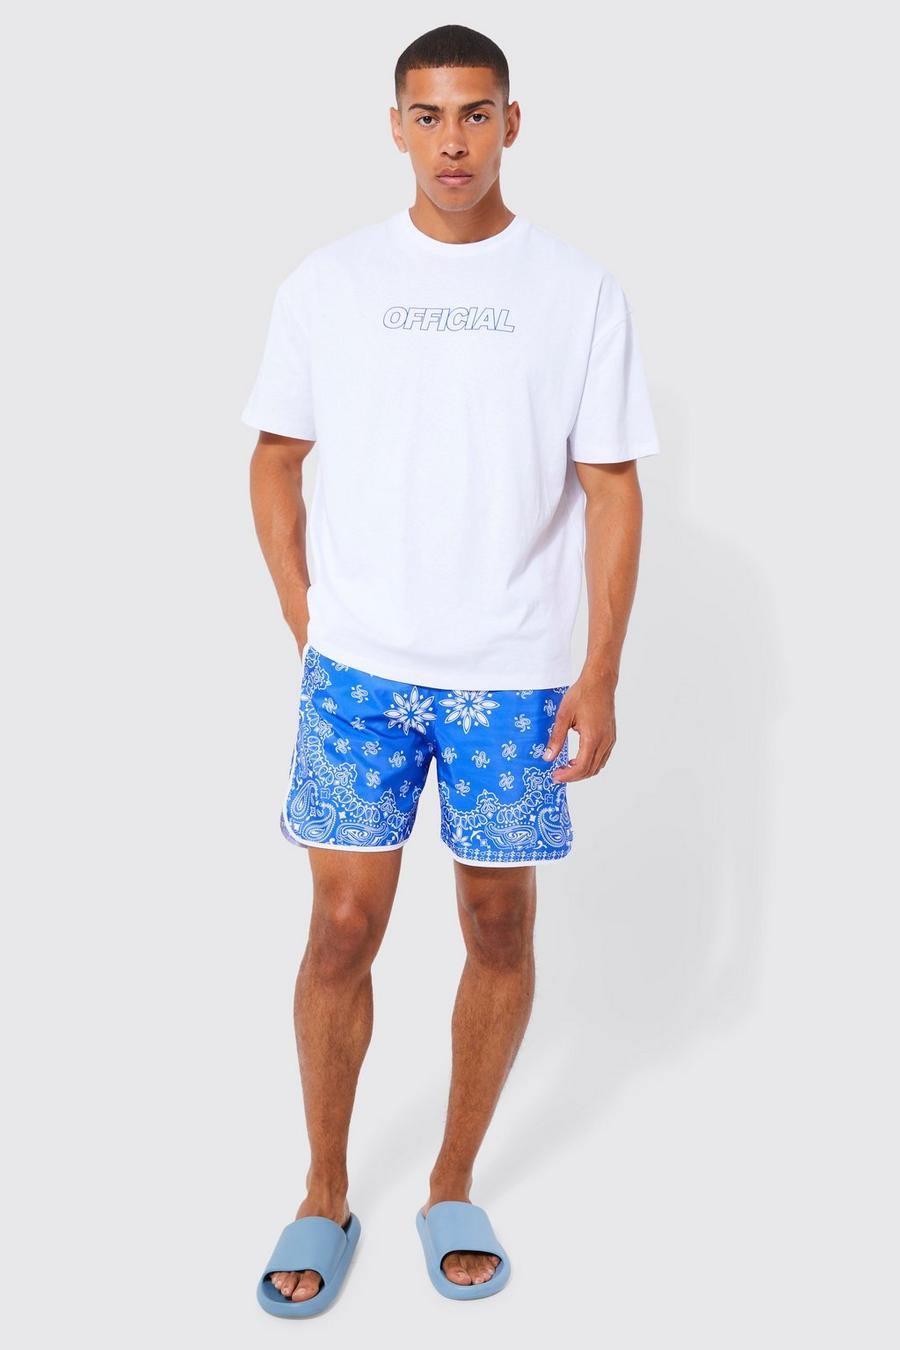 Cobalt blue Oversized Official Tshirt & Bandana Swim Set